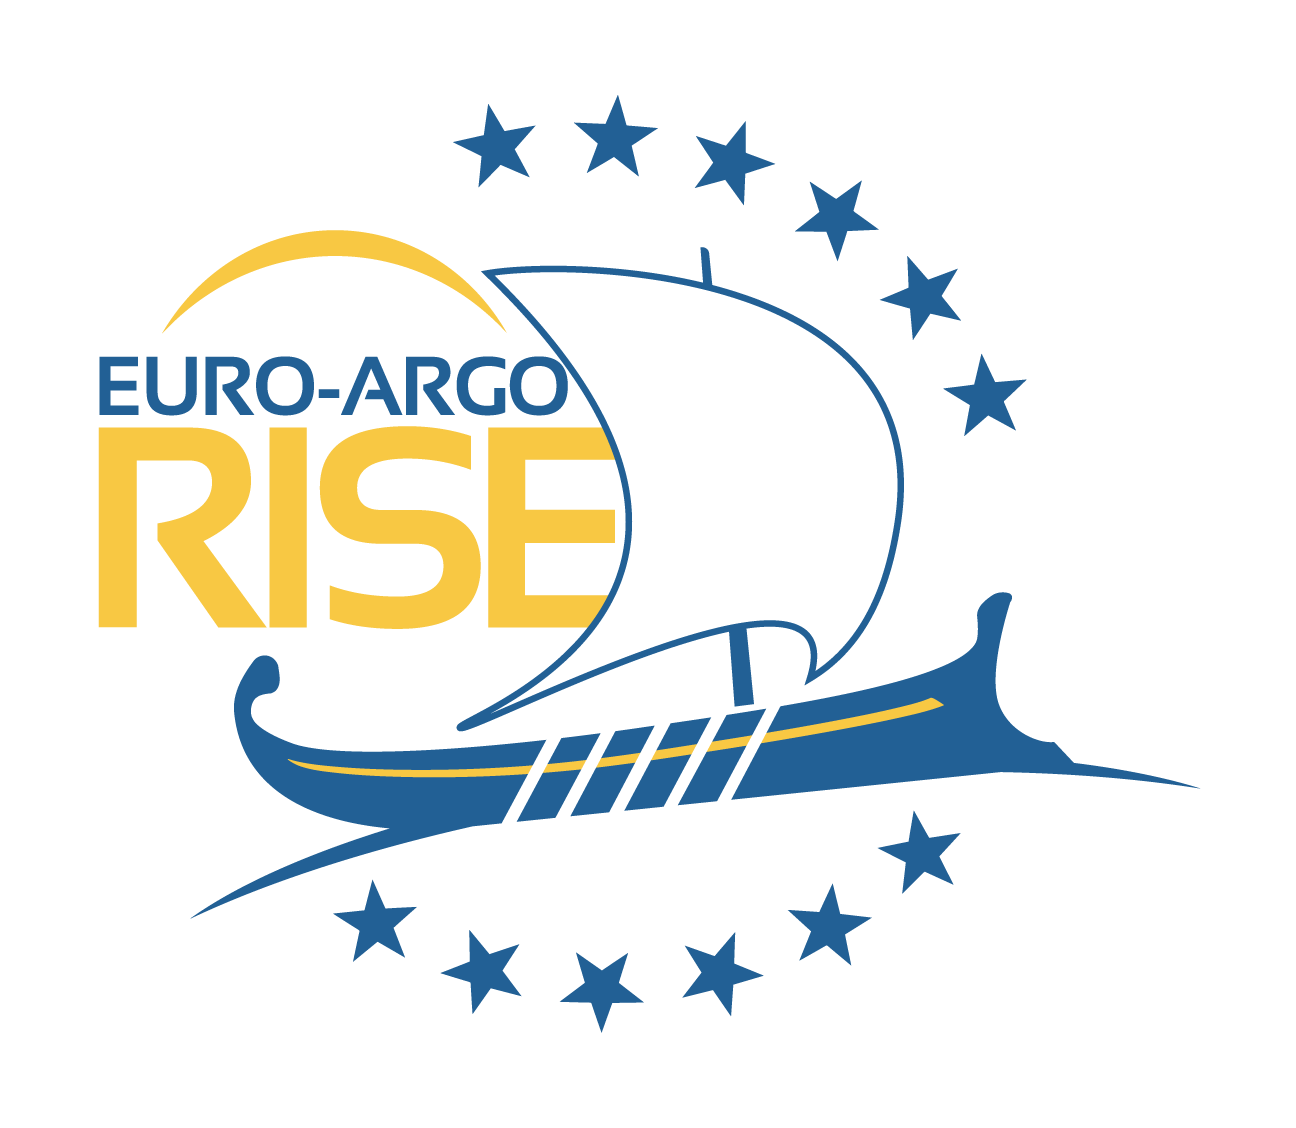 Euro Argo Rise Progress Euro Argo Ri